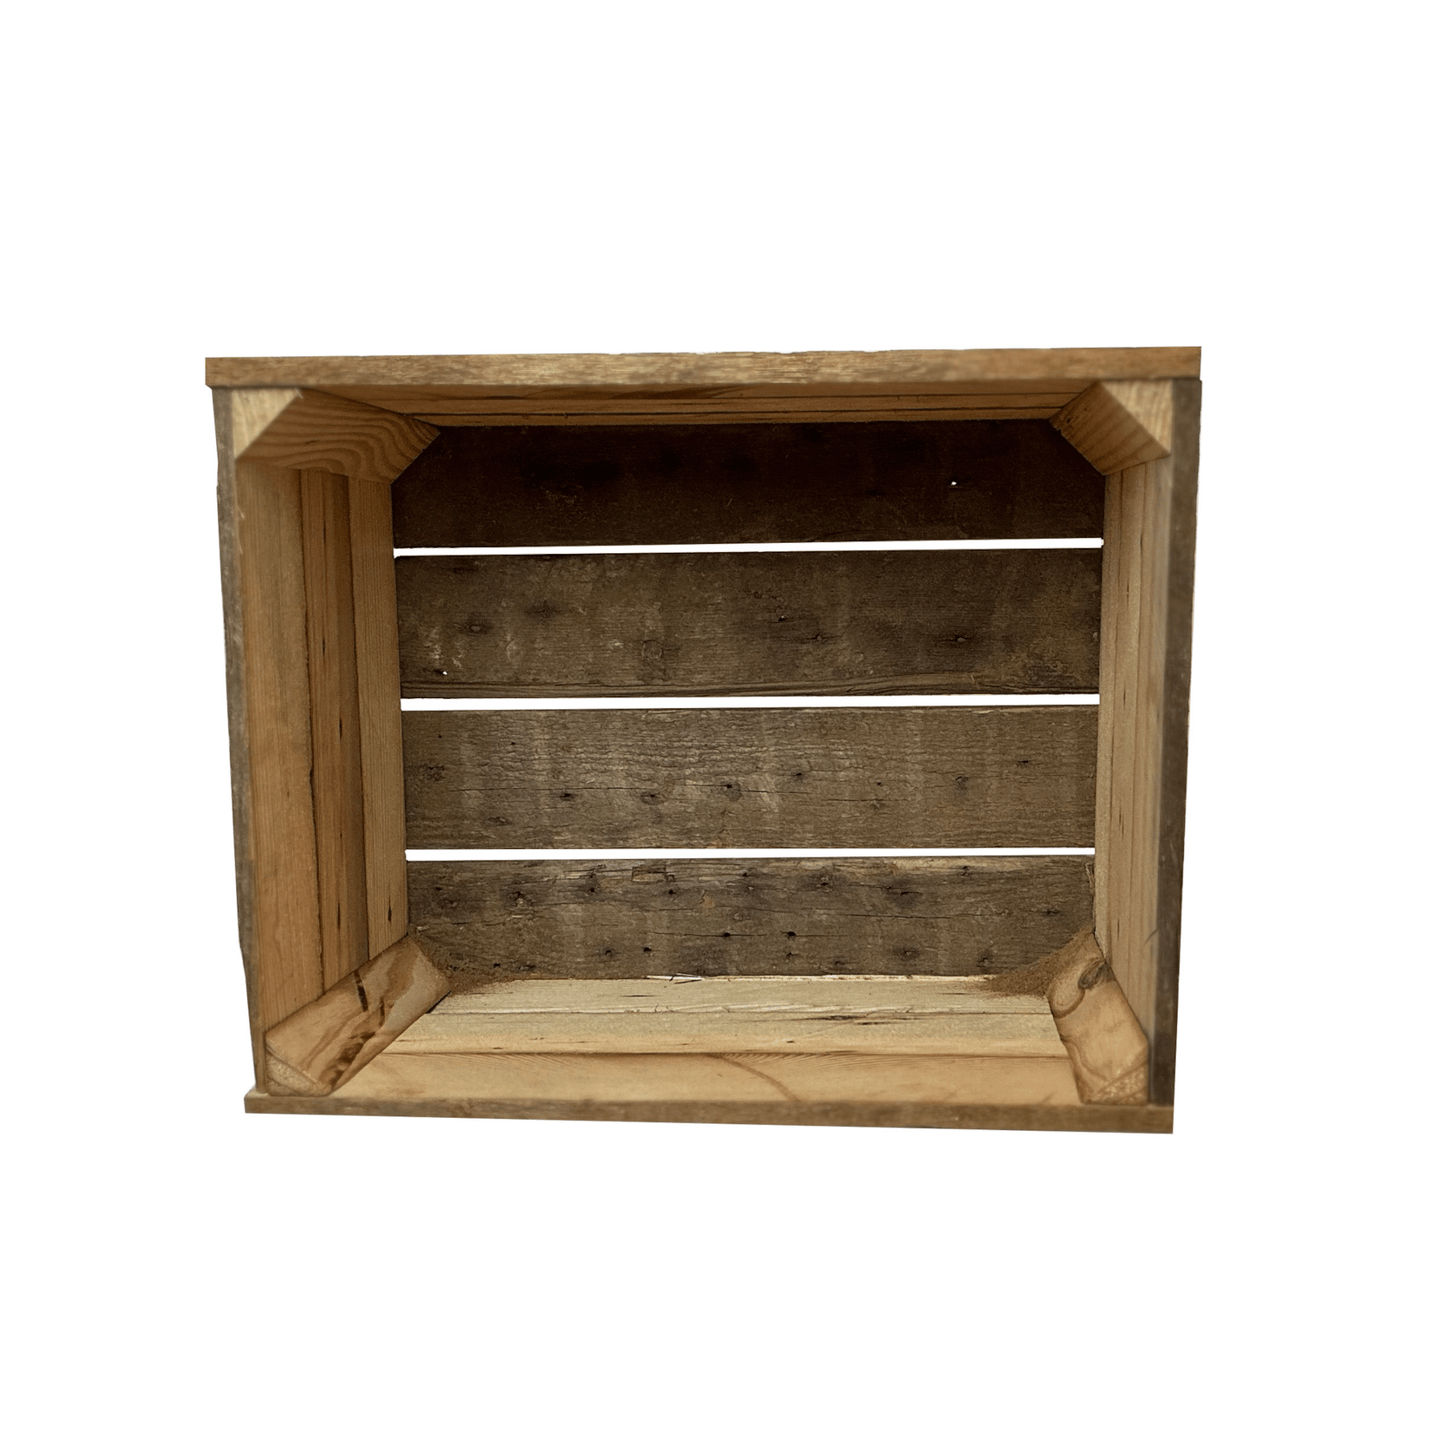 Medium Rustic Wooden Crate Reclaimed Barn Wood Storage Box